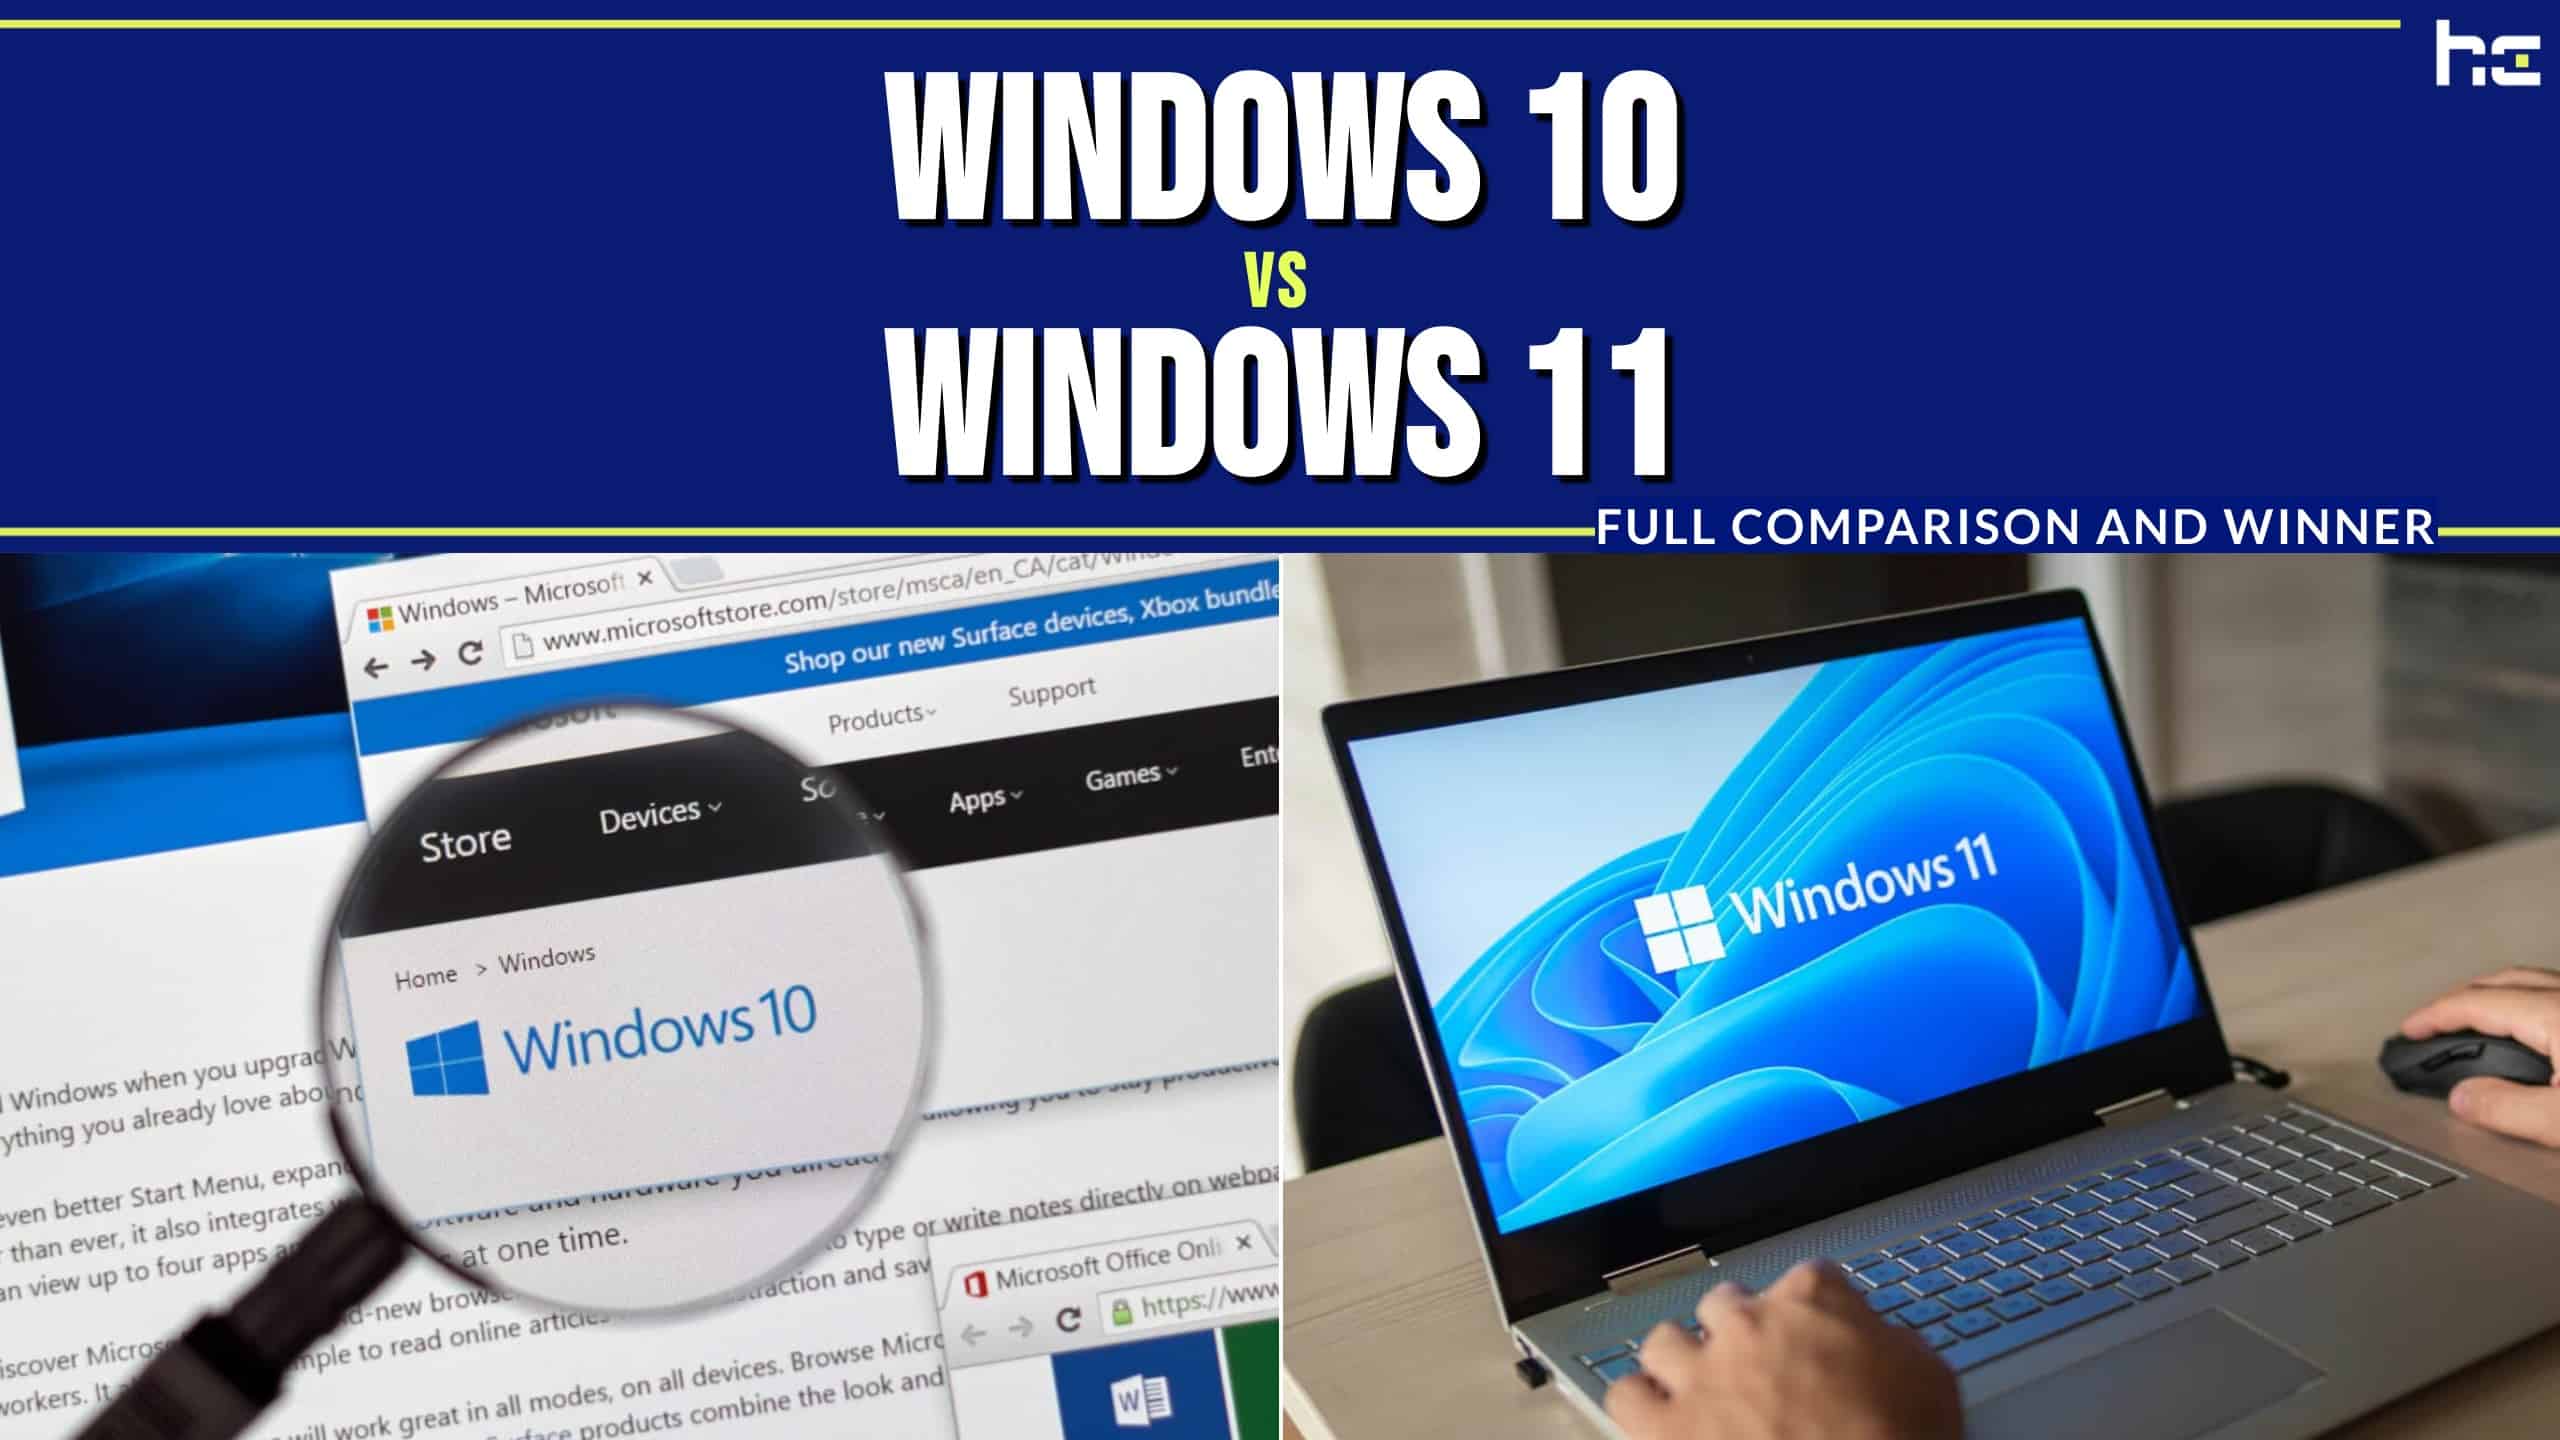 Windows 10 vs. Windows 11 Full Comparison and Winner